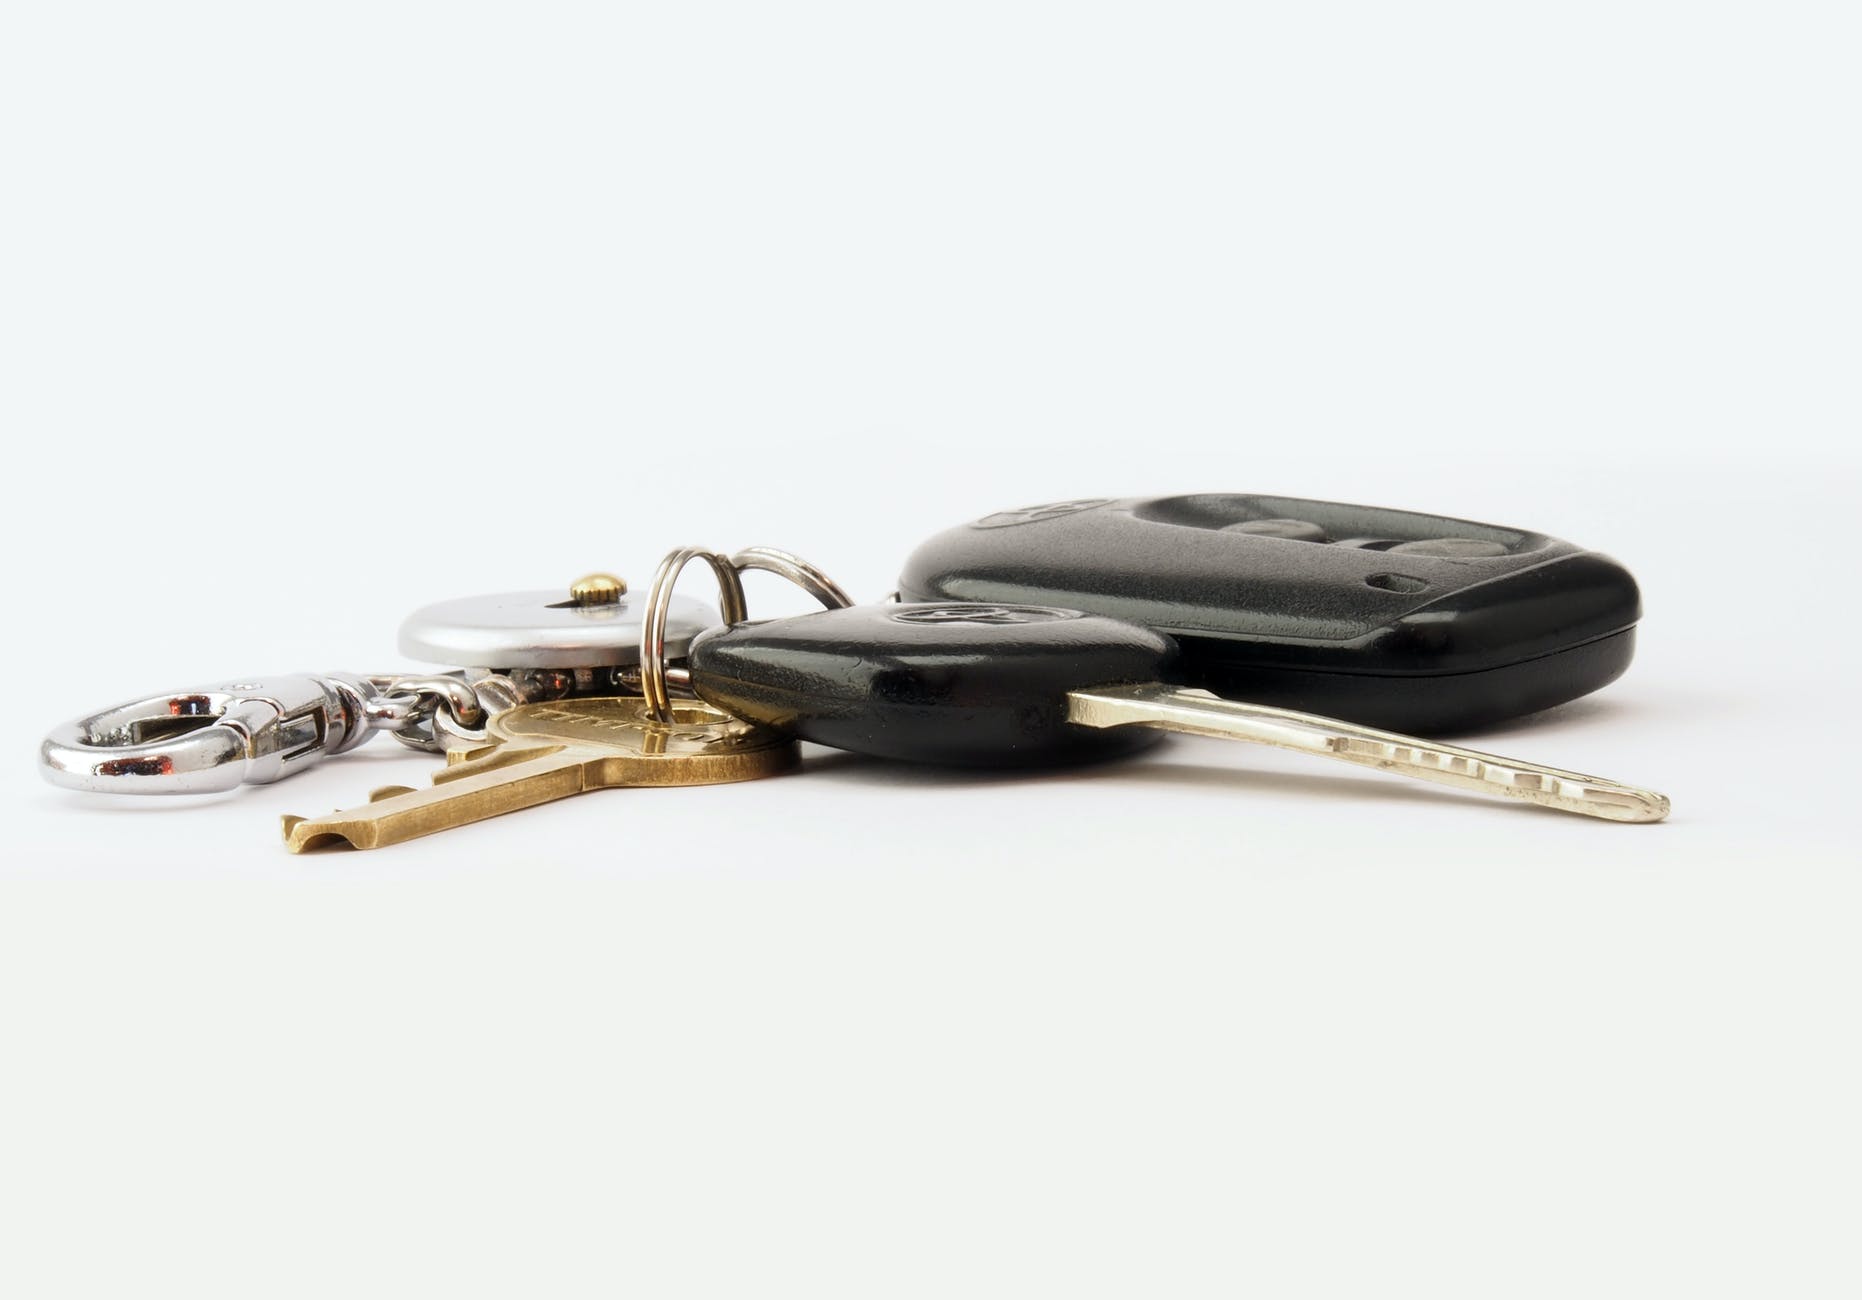 Those $15 dollar car keys | Source: Pexels